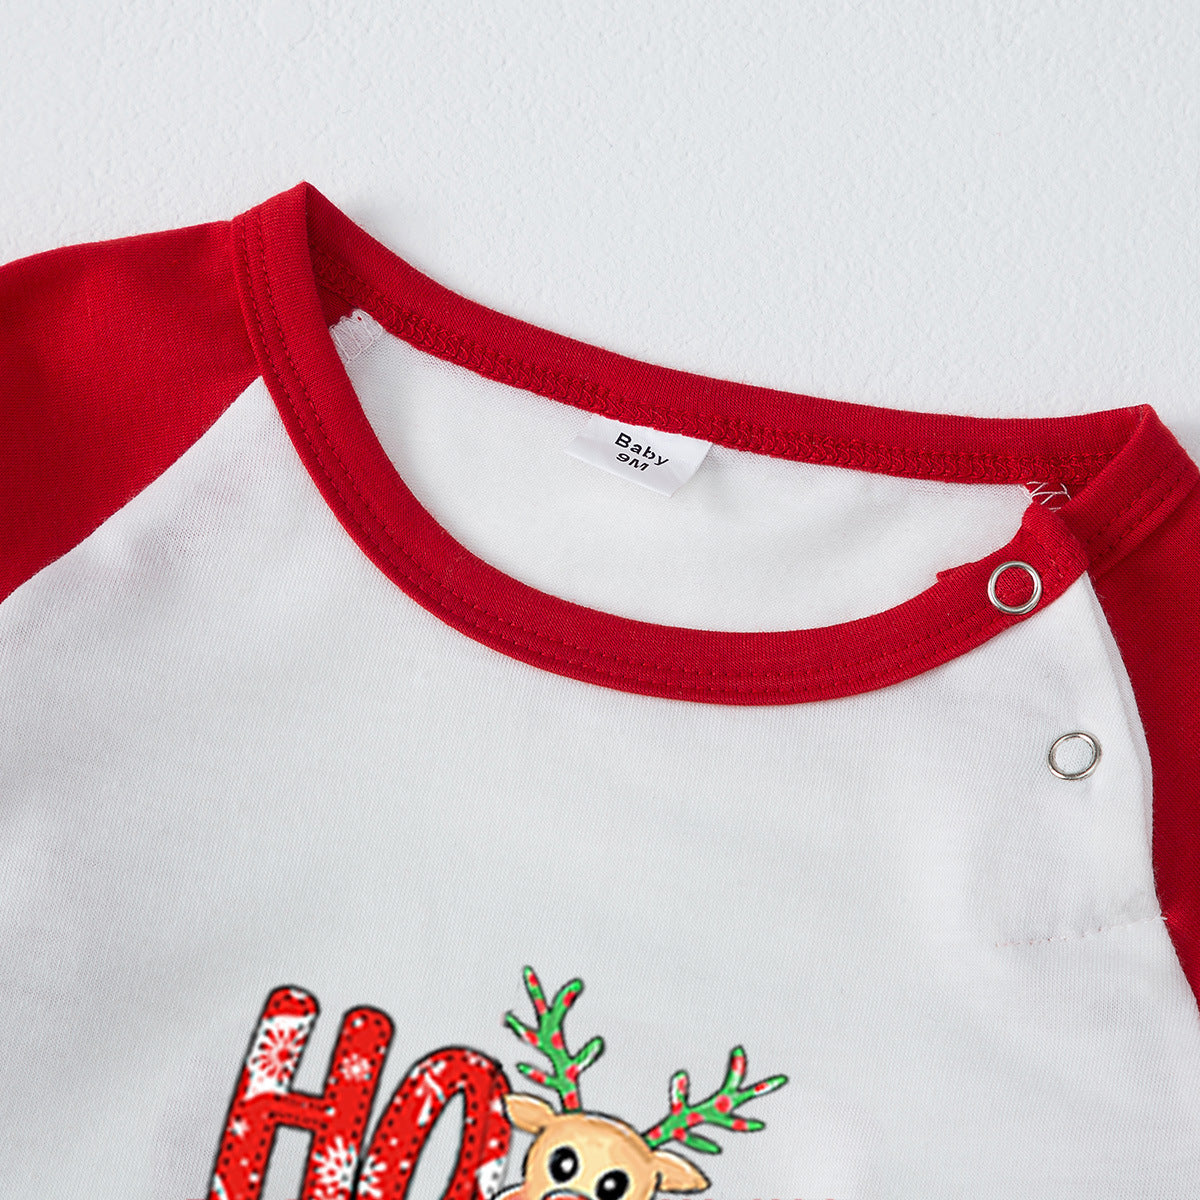 'HO HO HO' Christmas Cartoon Print Red&White Raglan Sleeve Pajamas JJFC07-865